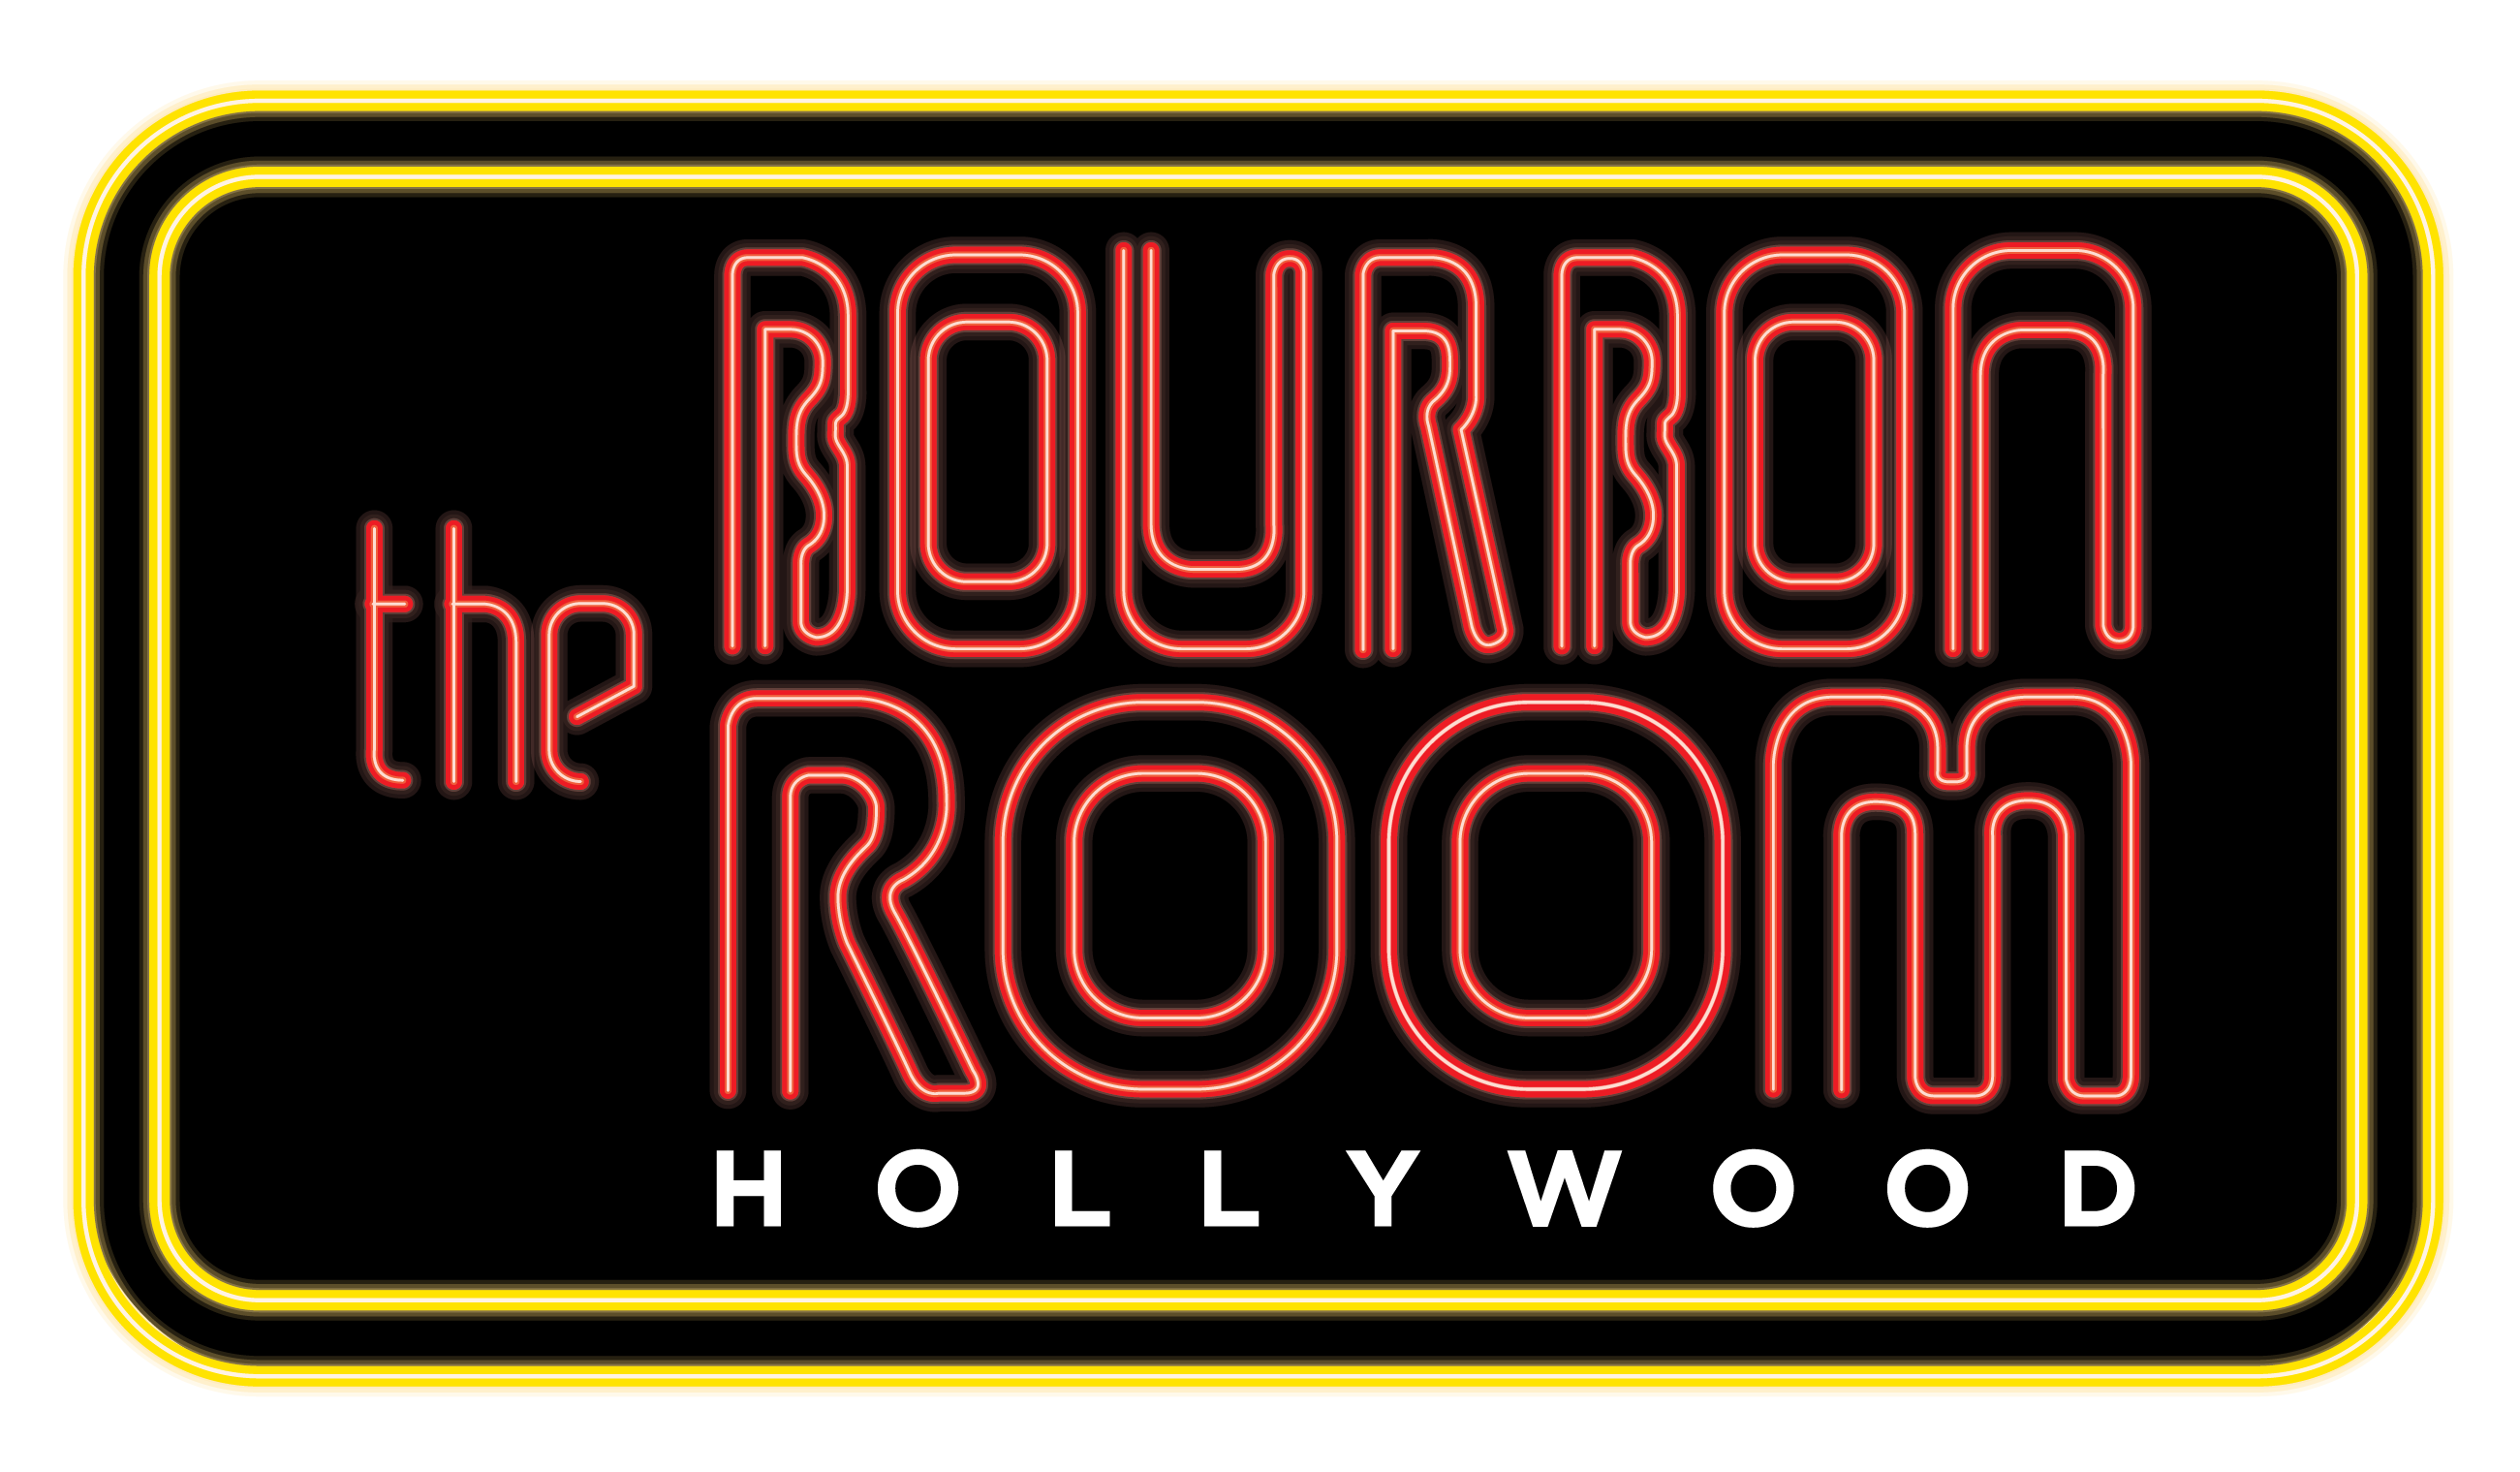 The Bourbon Room